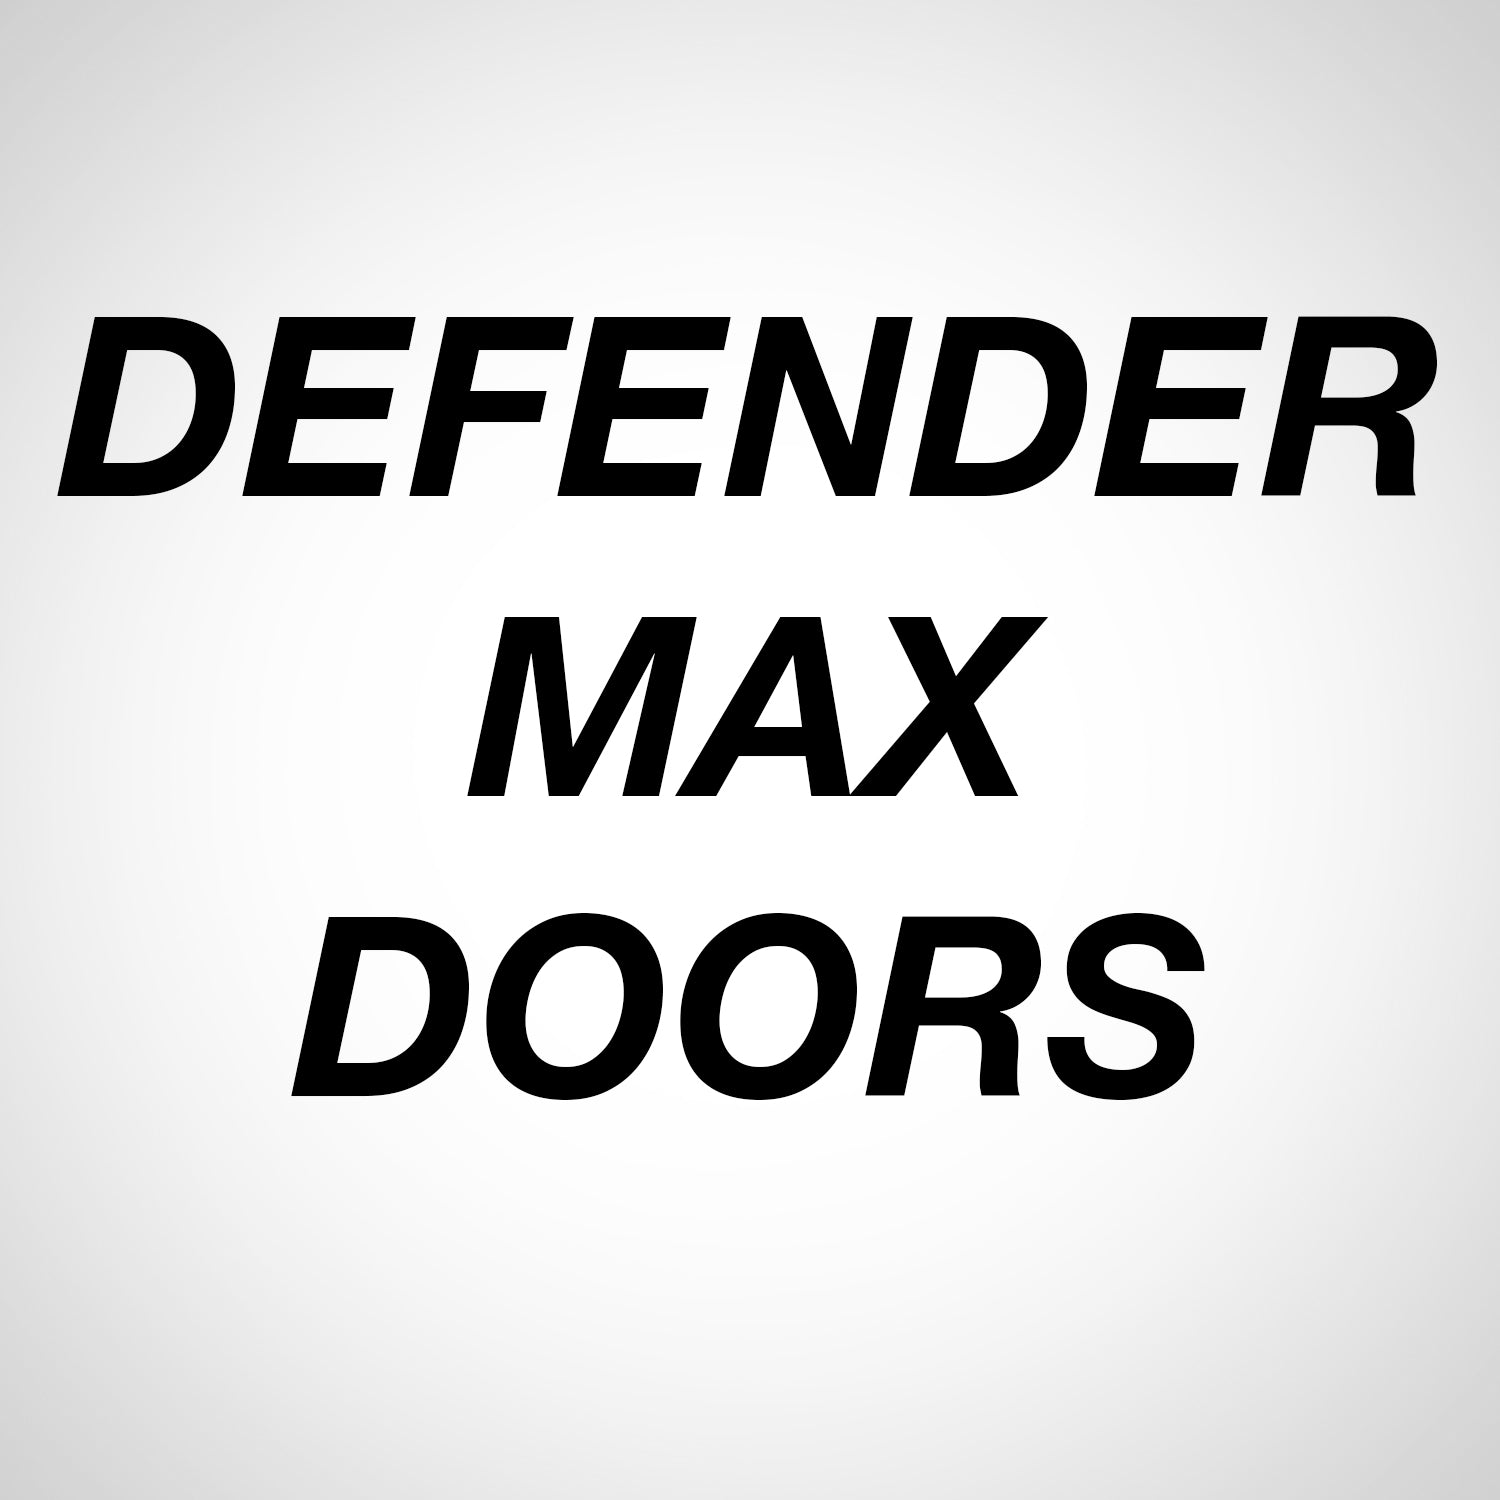 DEFENDER MAX DOORS